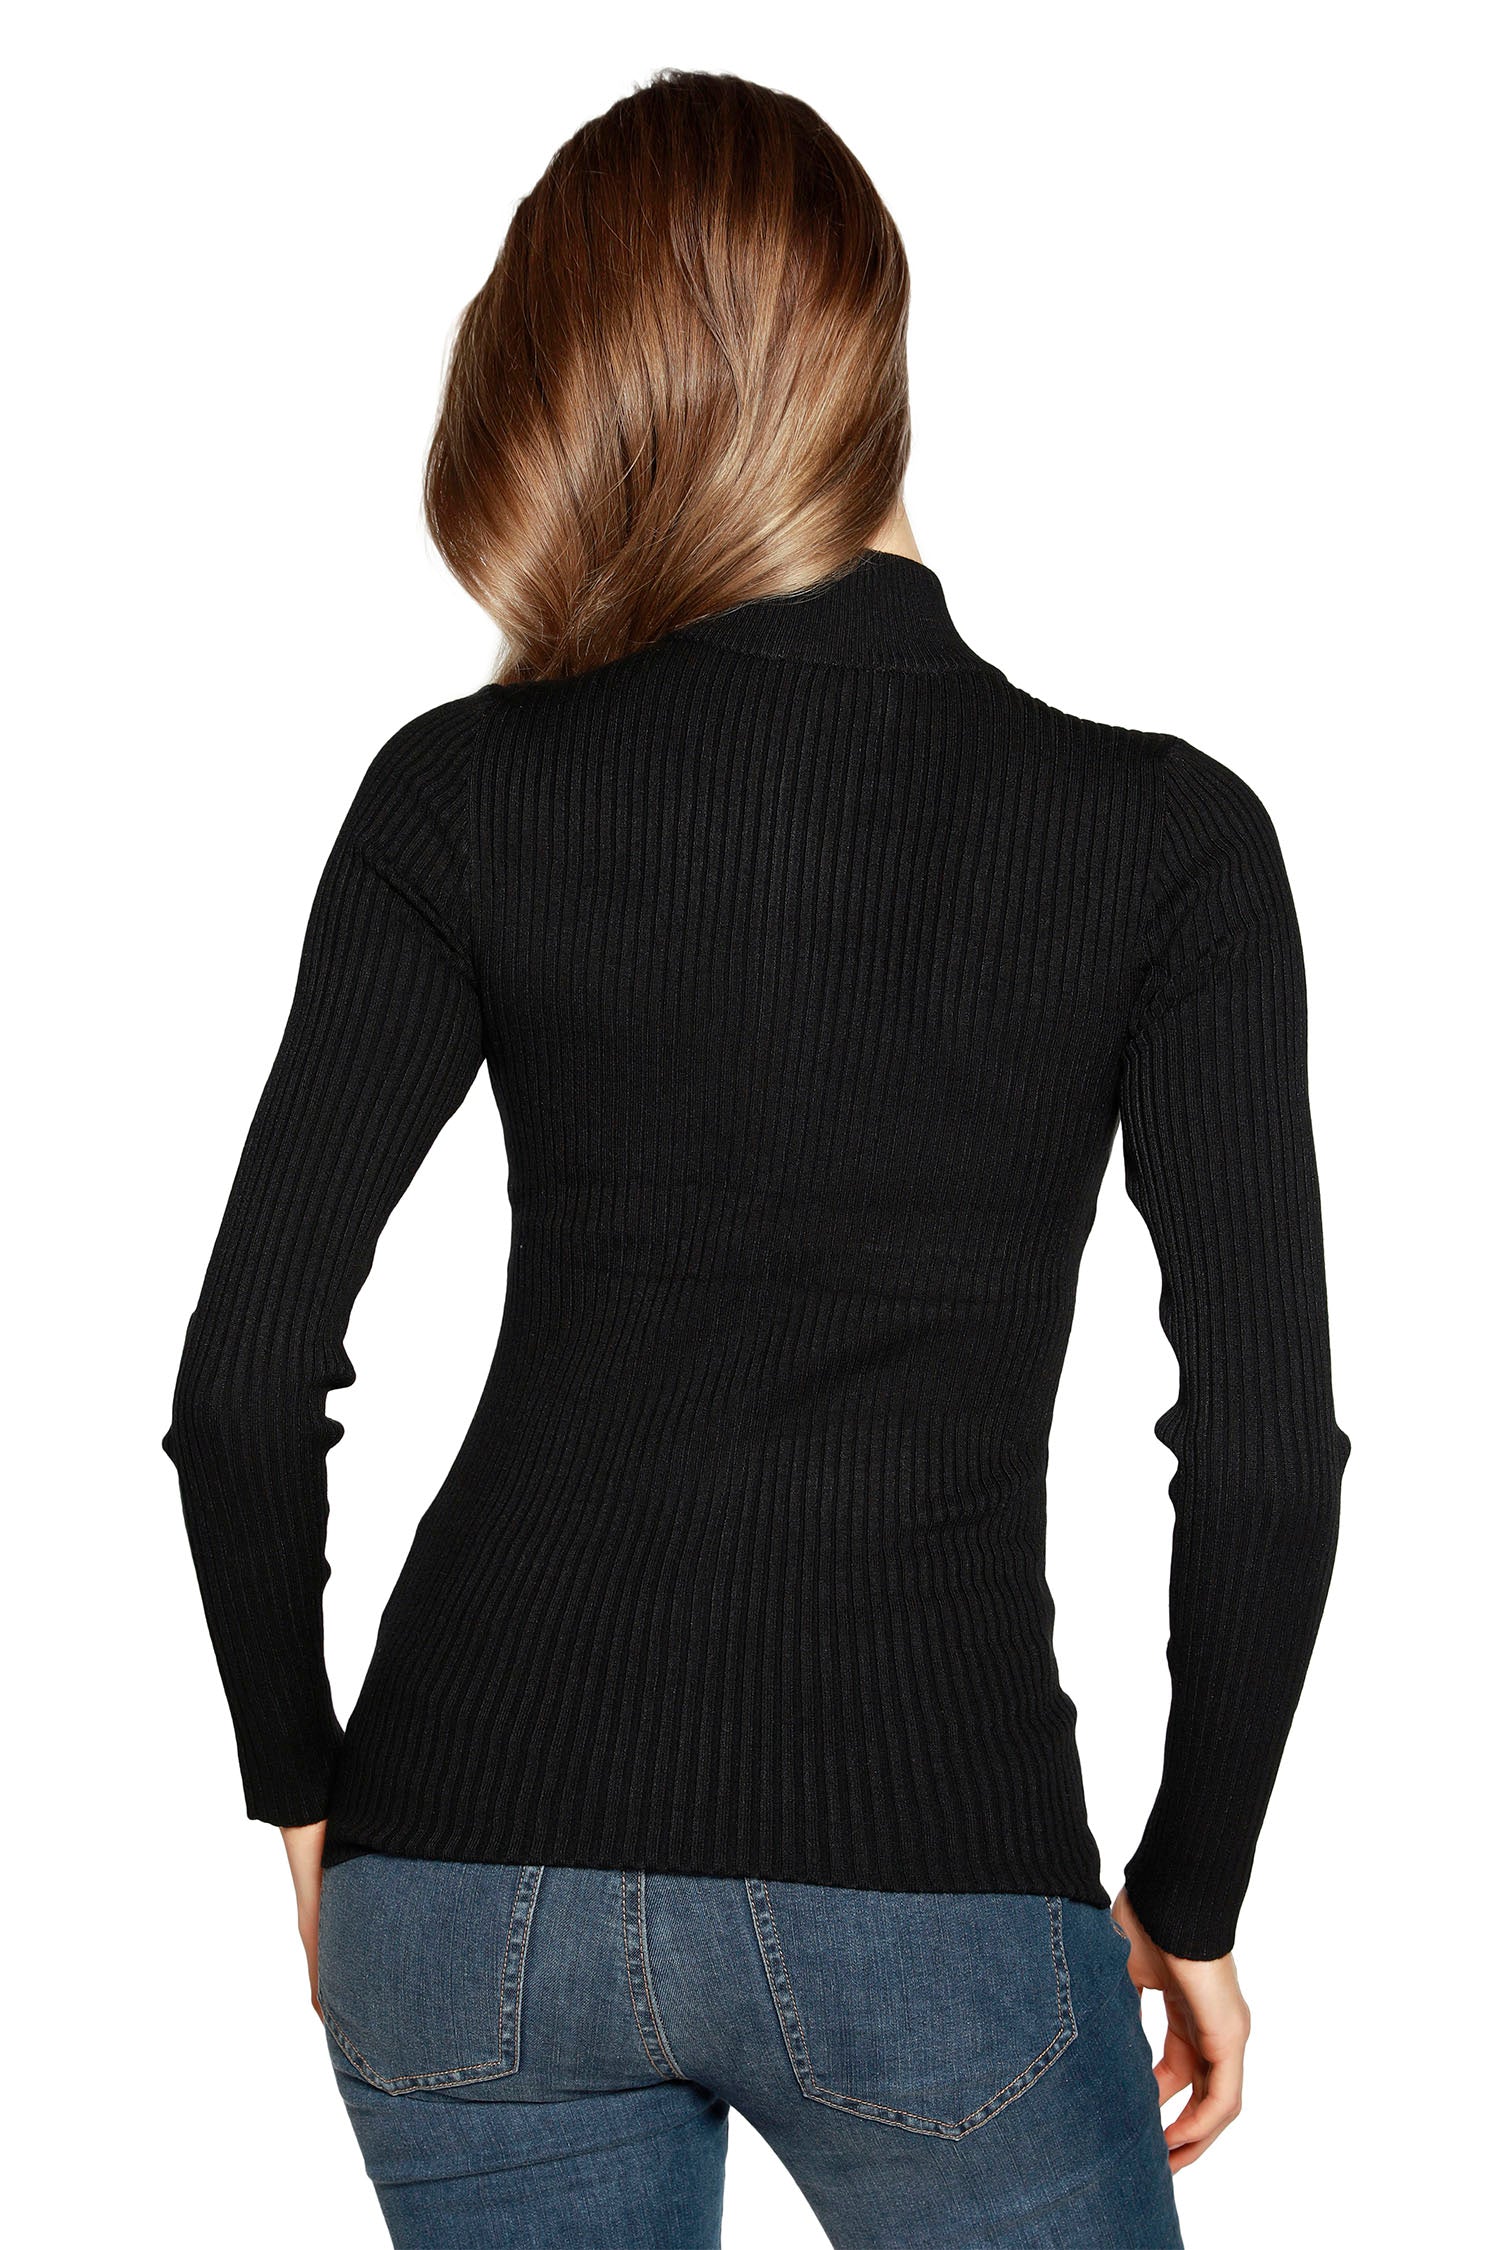 Women's Long Sleeve Mock Neck Ribbed Sweater with Diamond Zipper